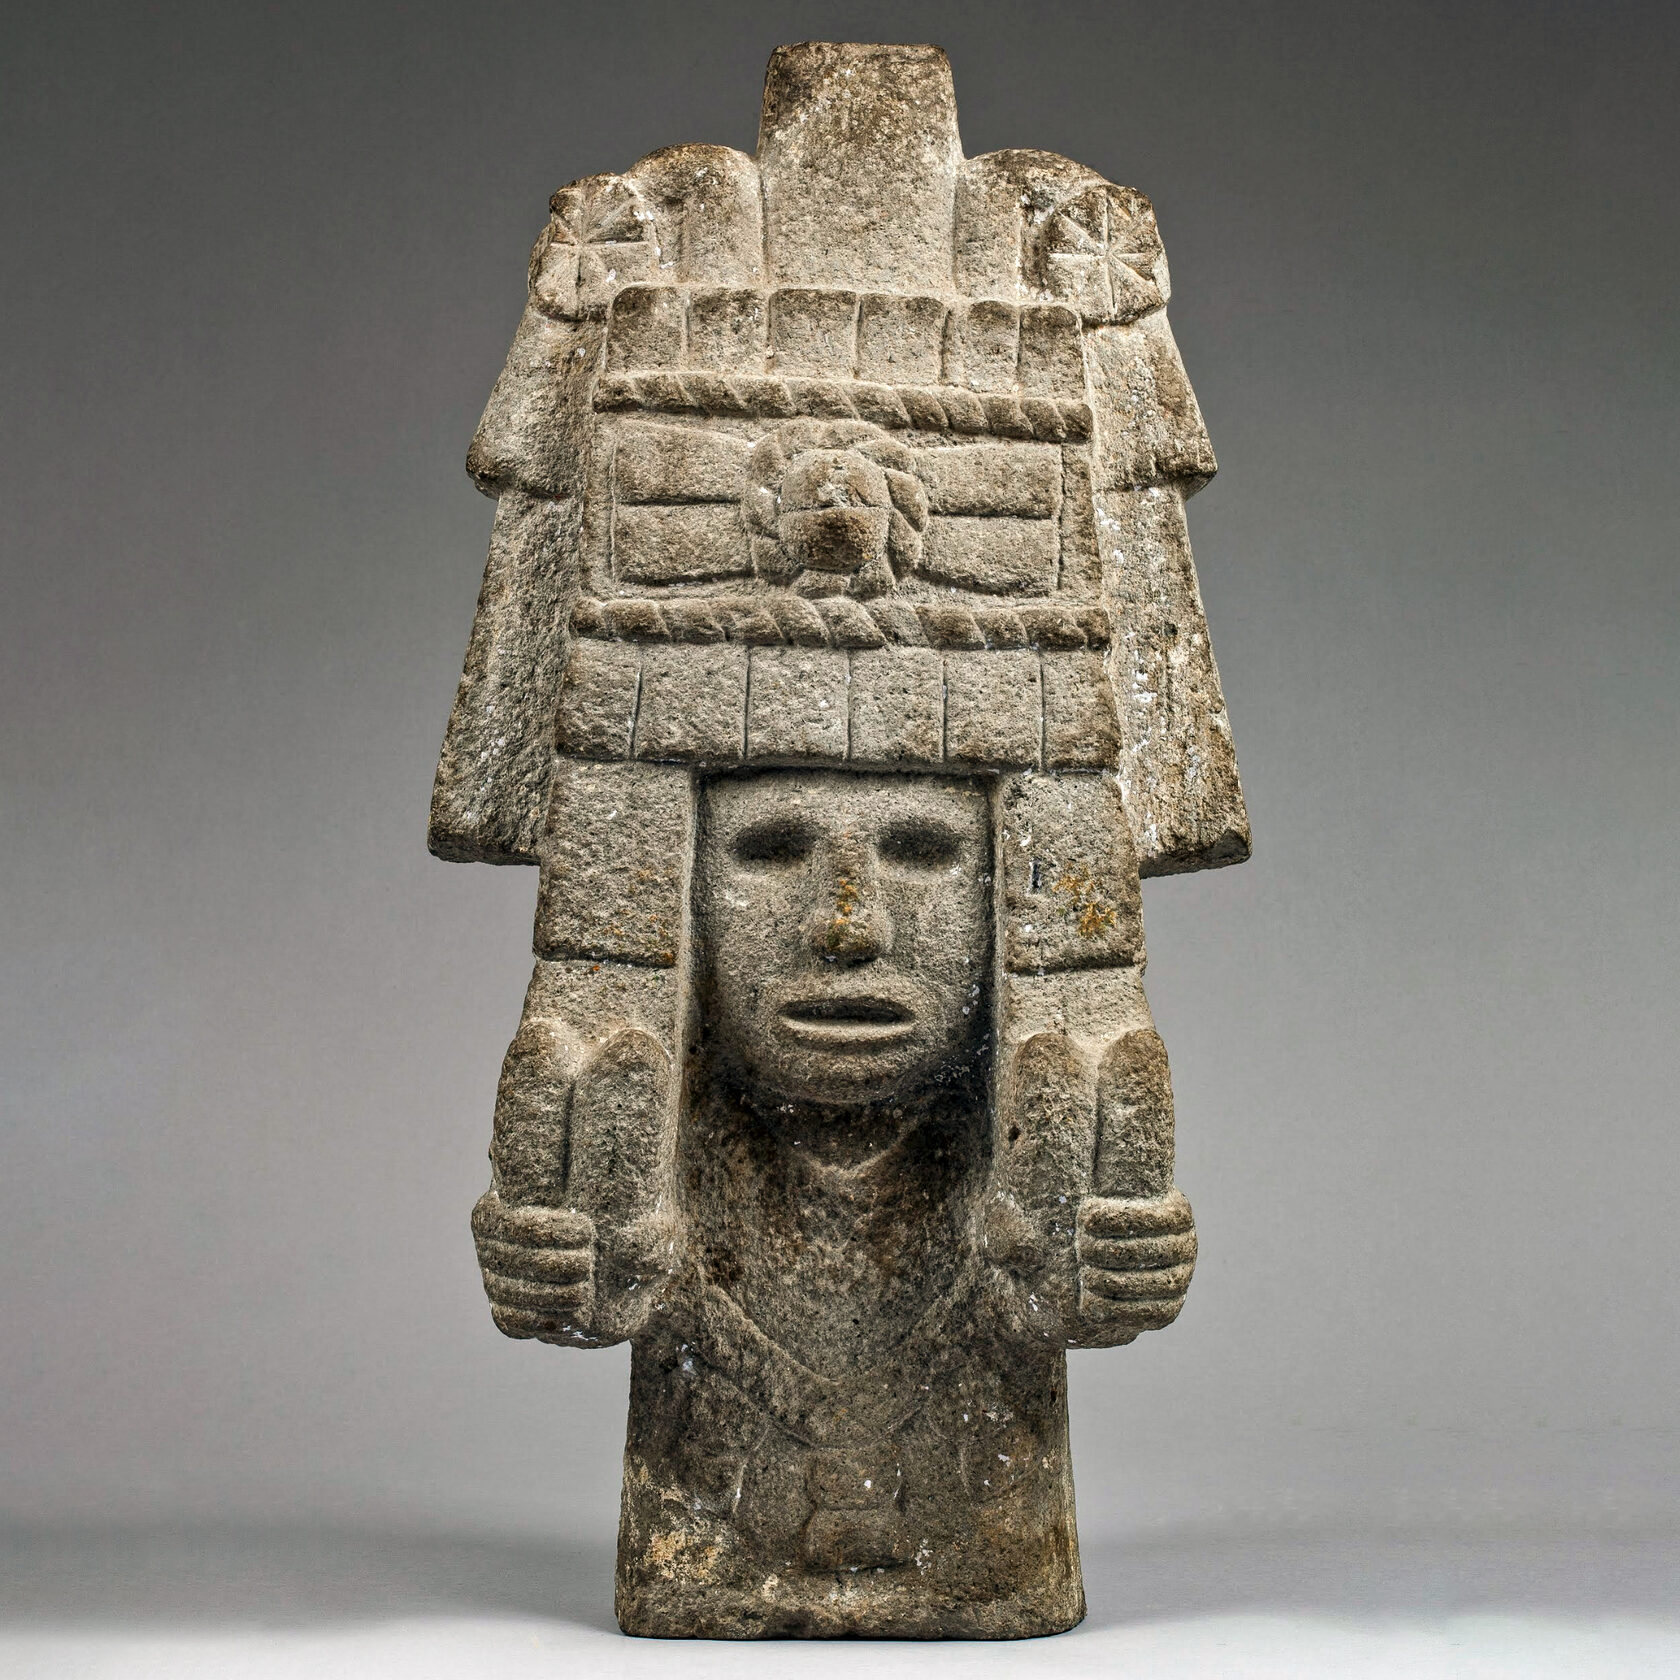 Богиня кукурузы. Ацтеки, 1500 гг. н.э. Коллекция National Museum of Mexican Art, Чикаго.